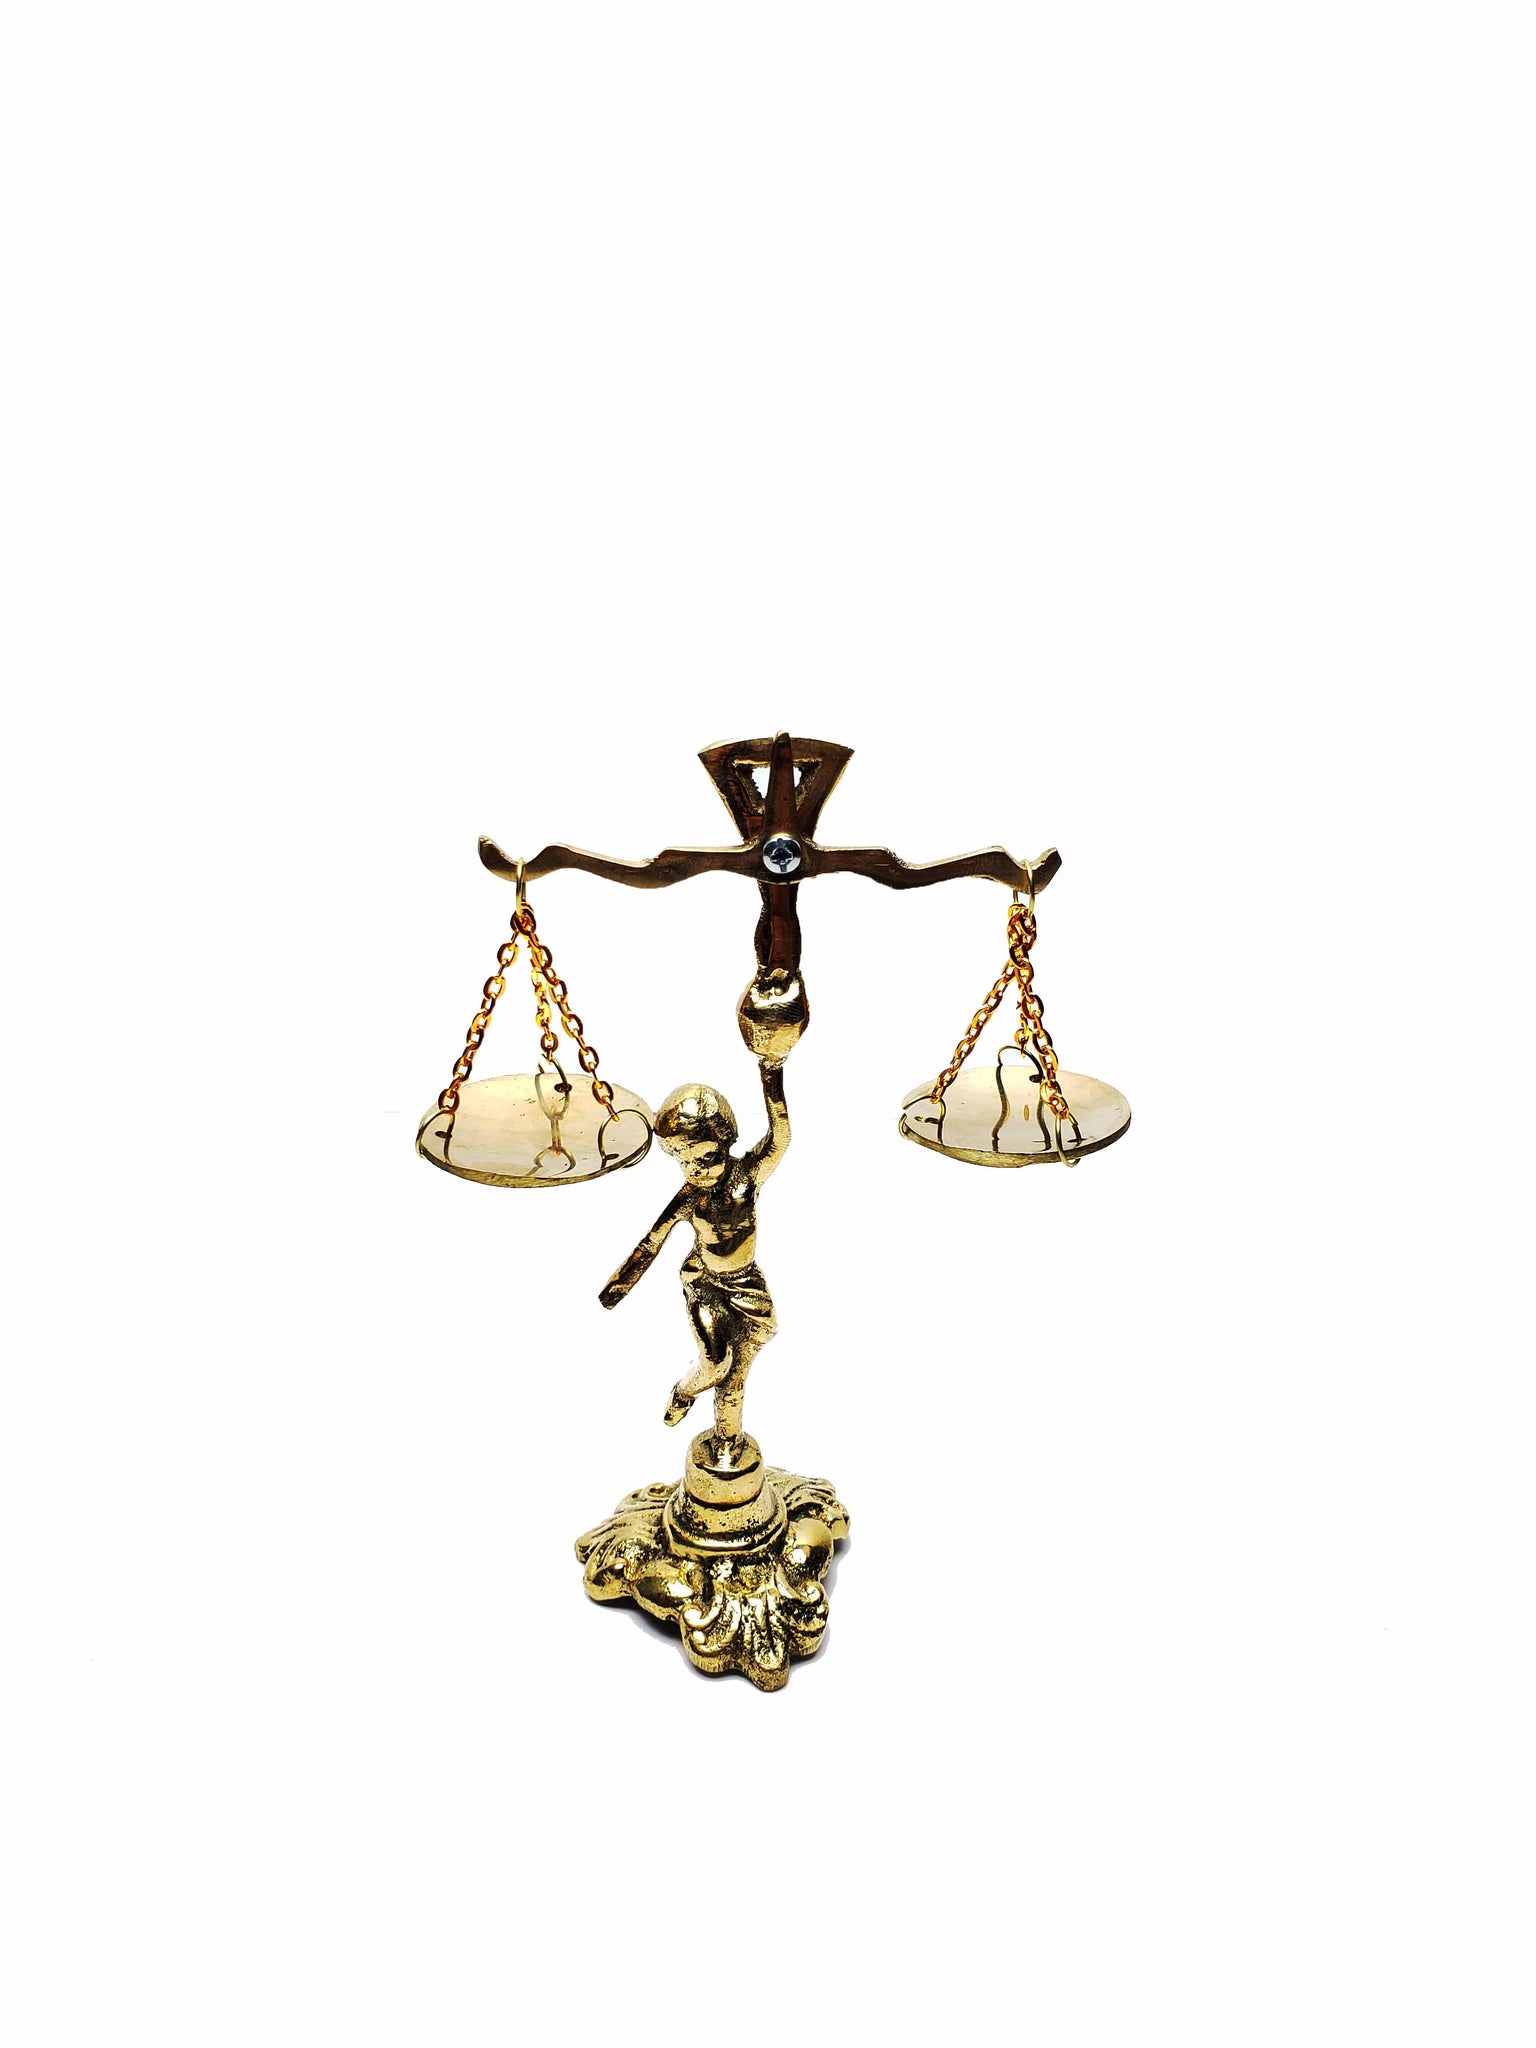 Small Brass Balance Scale